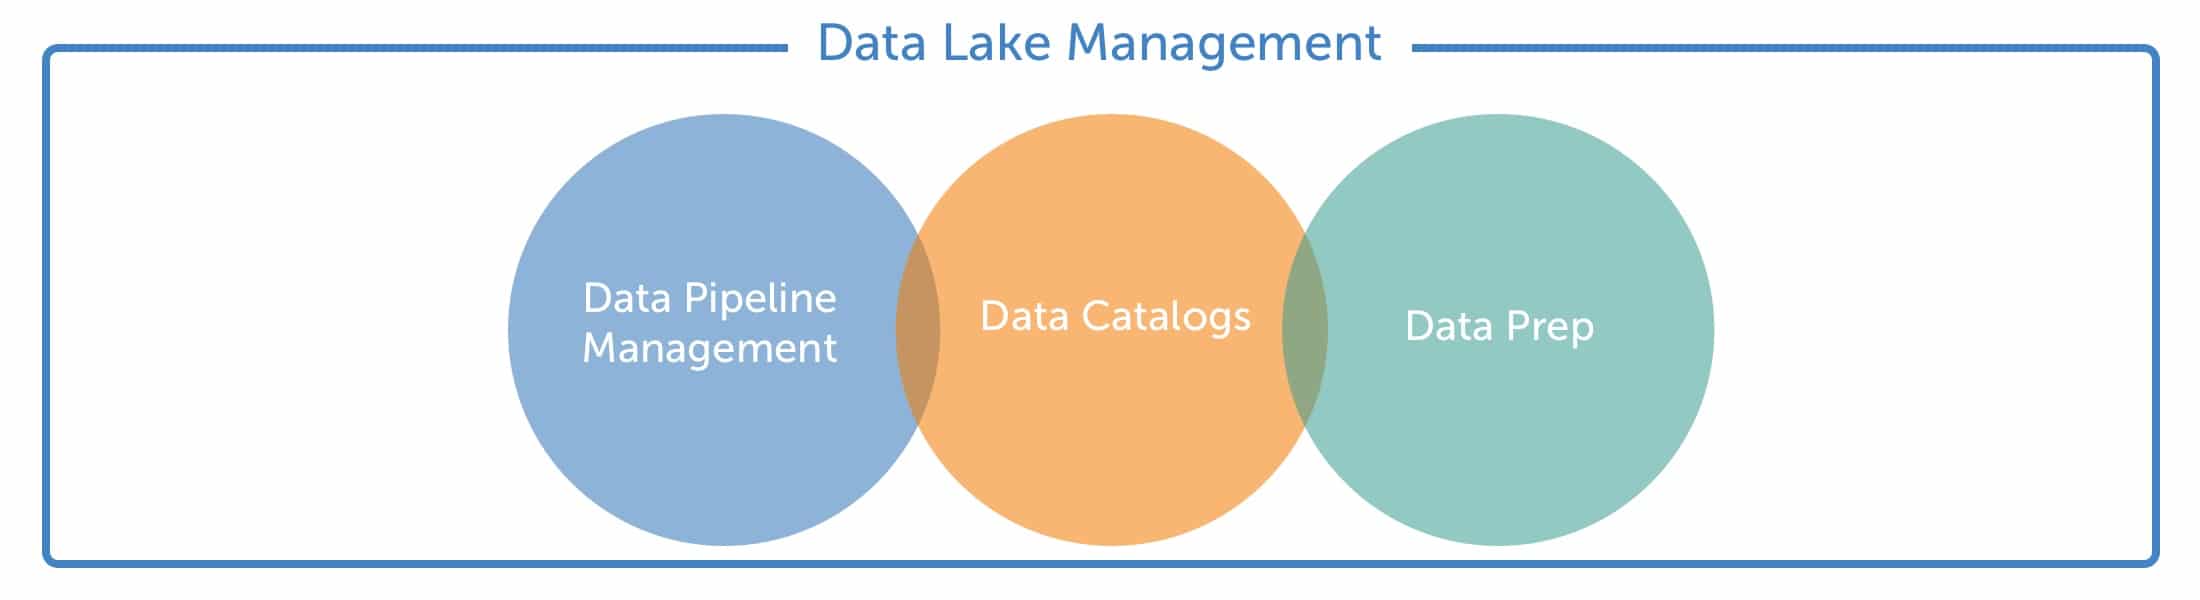 Data Lake Management